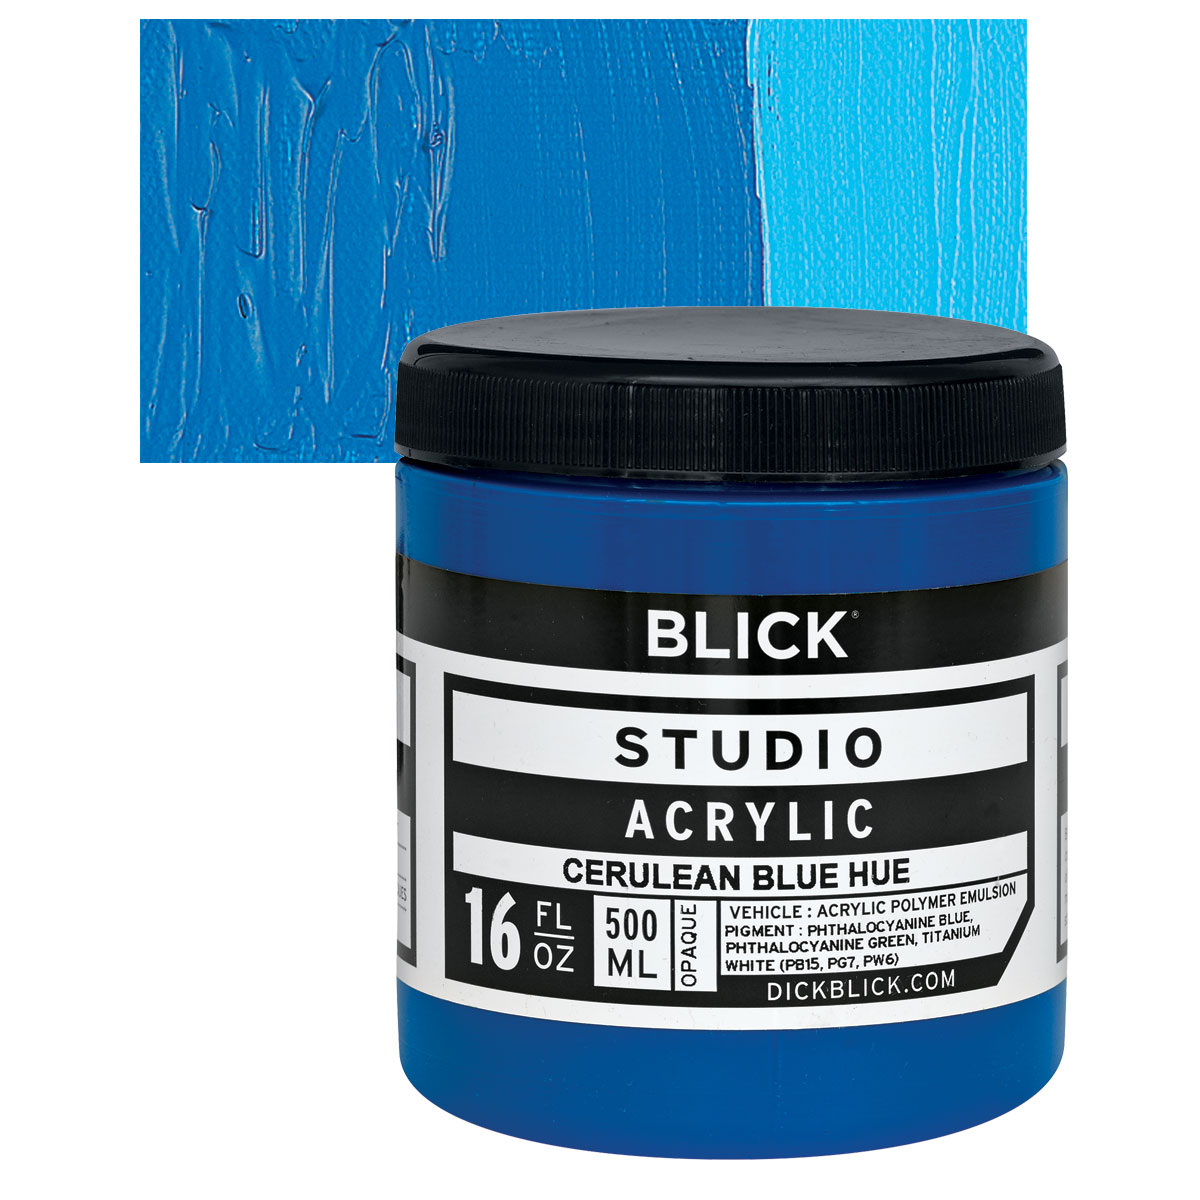 Blick Studio Acrylics - Silver Metallic, 4 oz tube